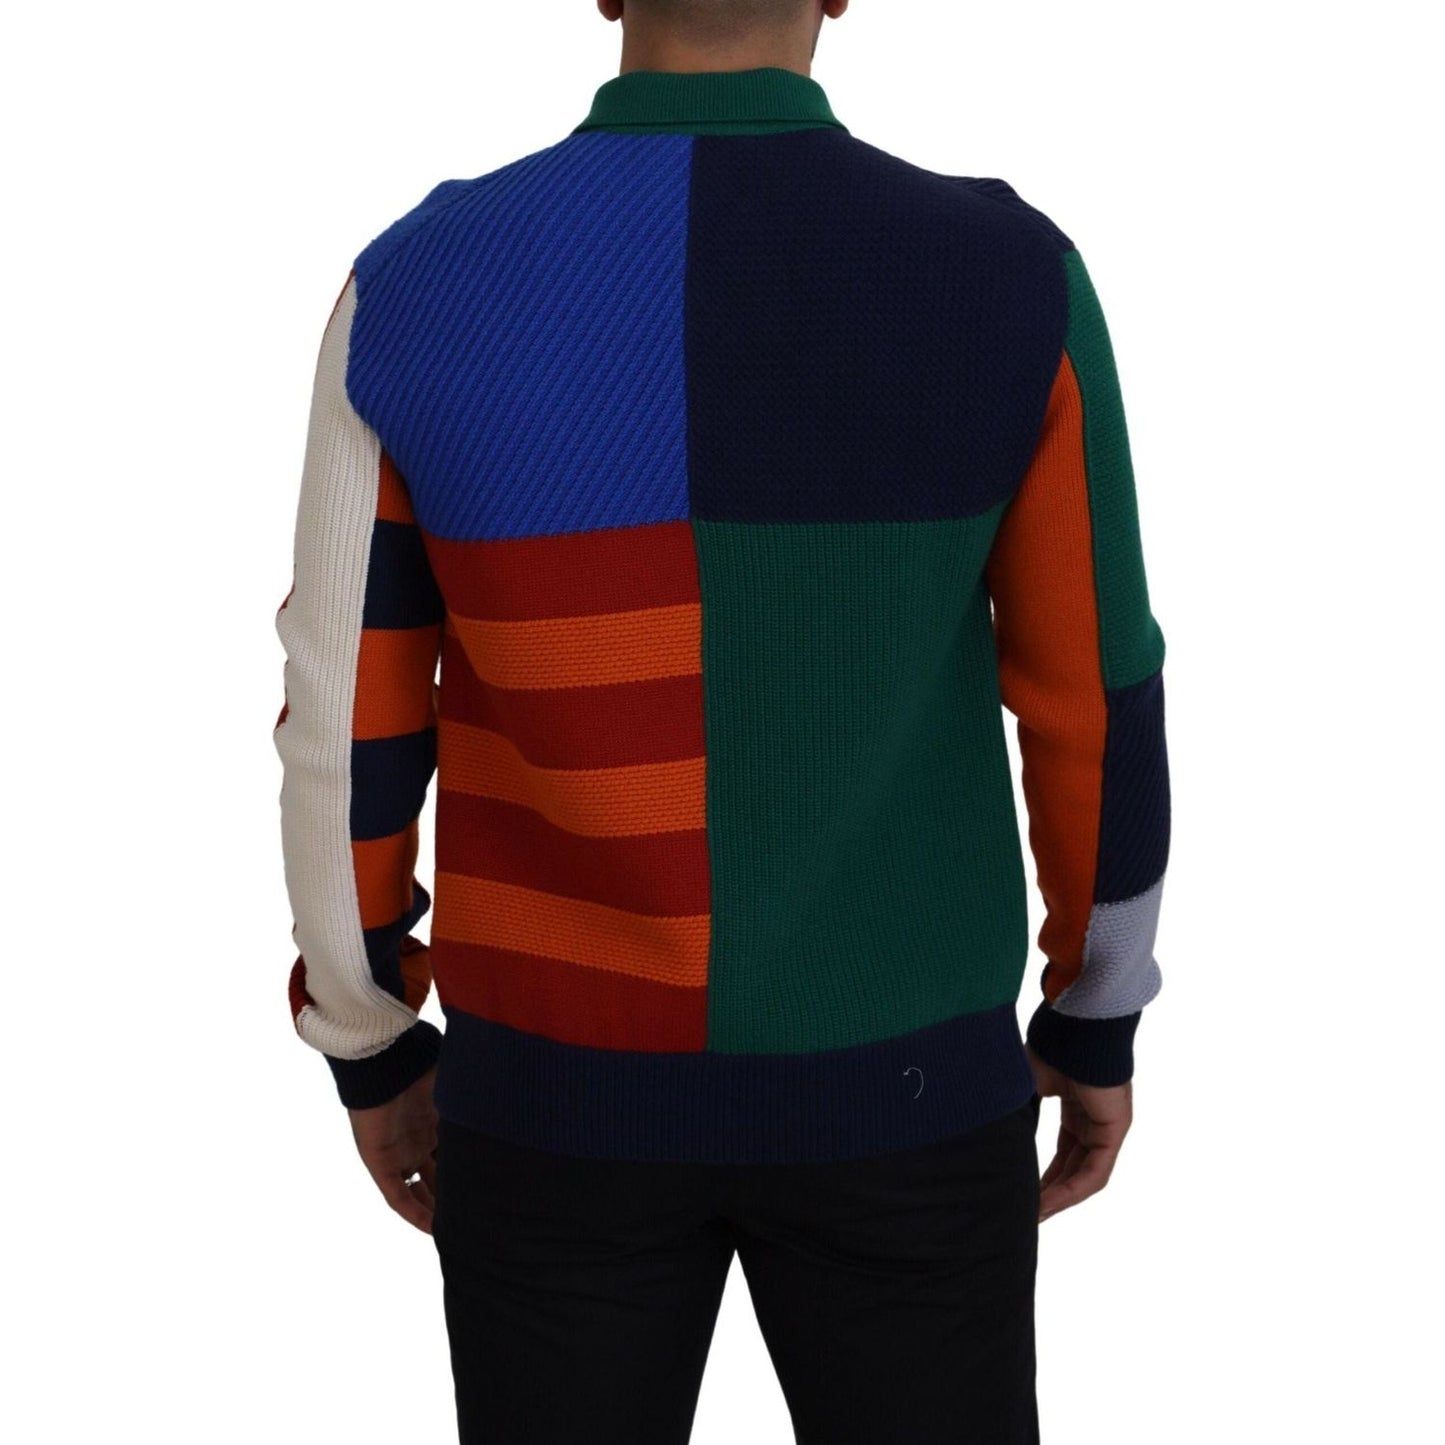 Dolce & GabbanaPullover Sweater in Multicolor StripesMcRichard Designer Brands£829.00